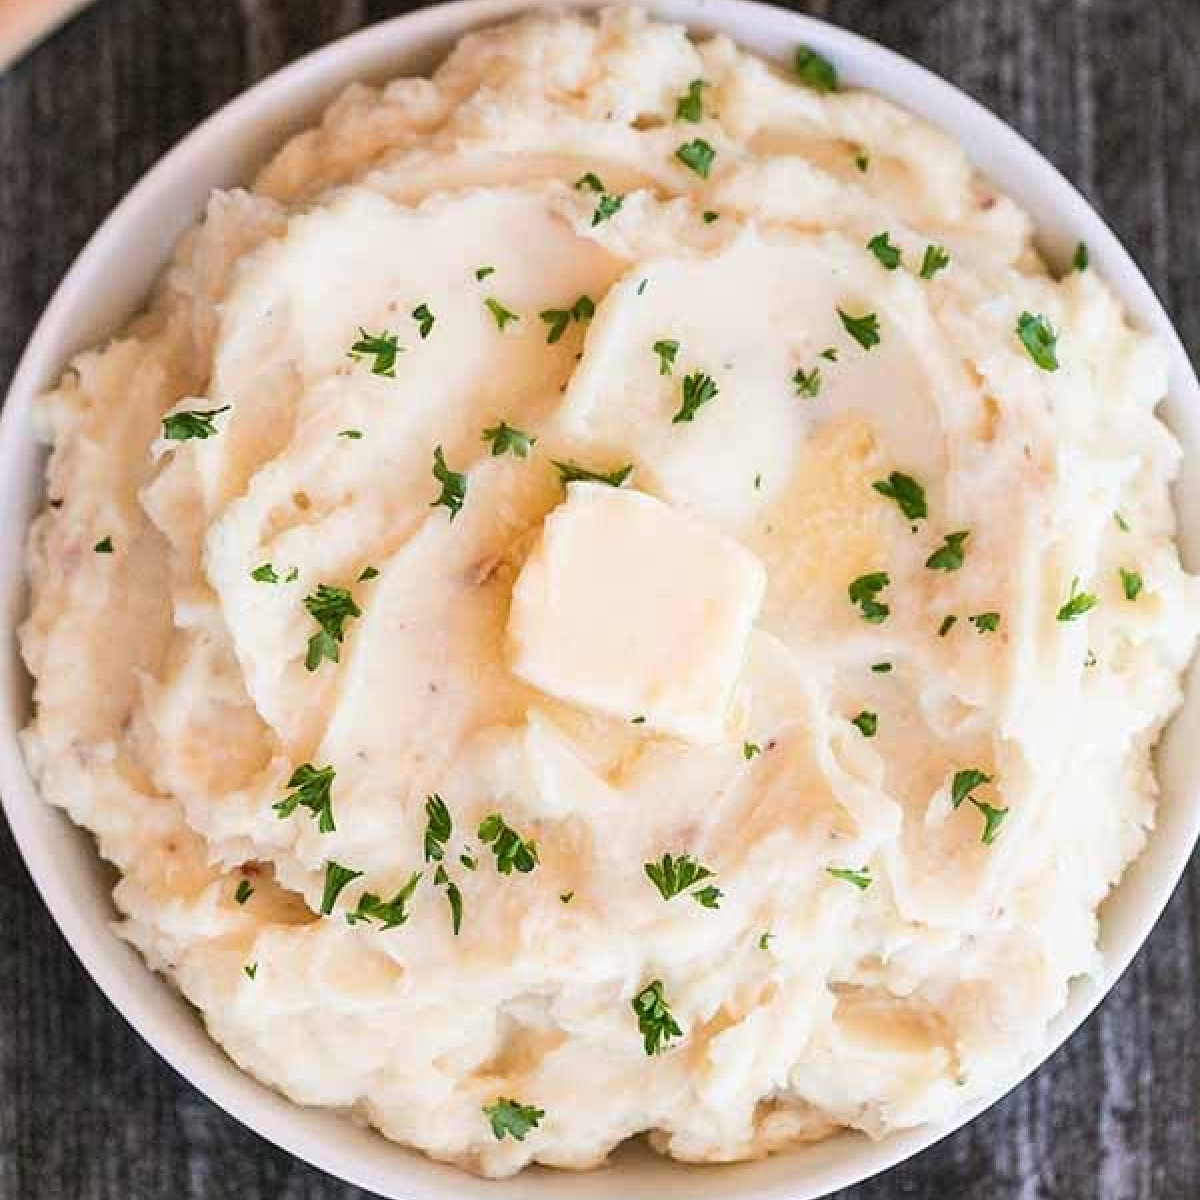 https://www.eatingonadime.com/wp-content/uploads/2020/08/crock-pot-mashed-potatoes-square.jpg